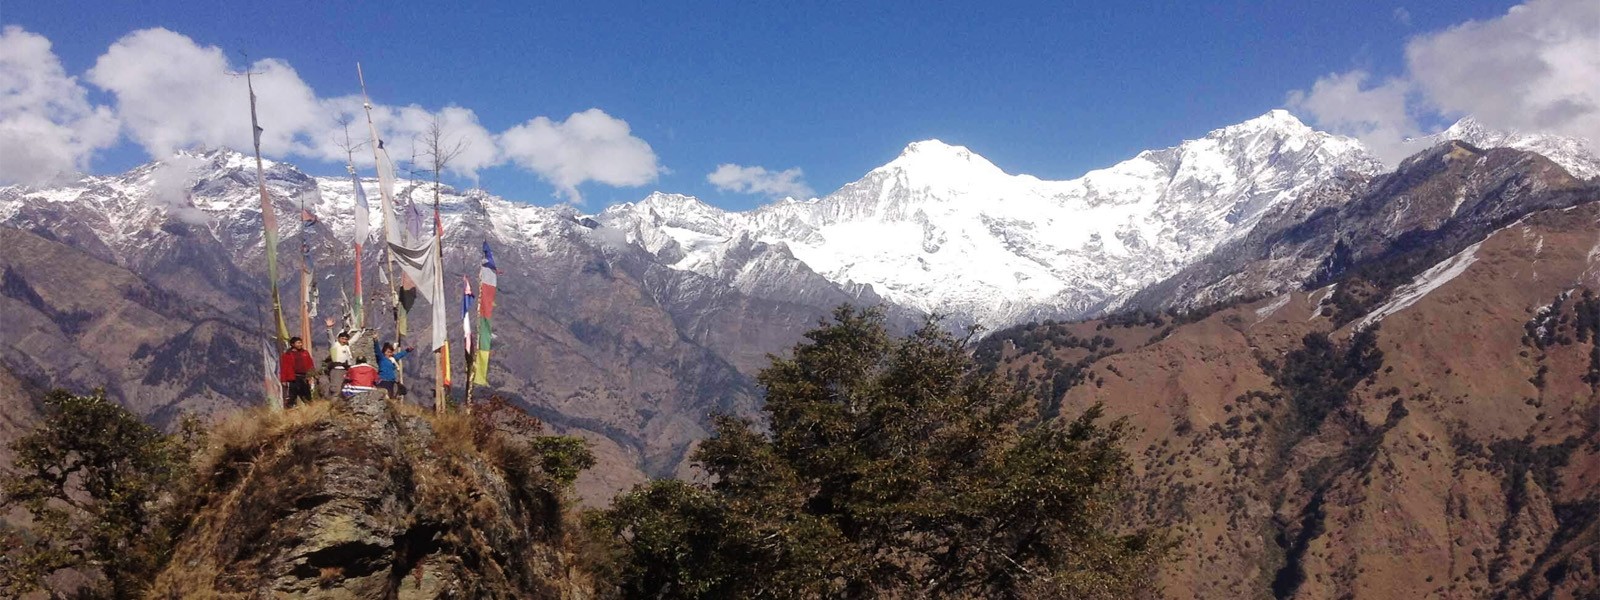 Mt. Ganesh Himal II Expedition